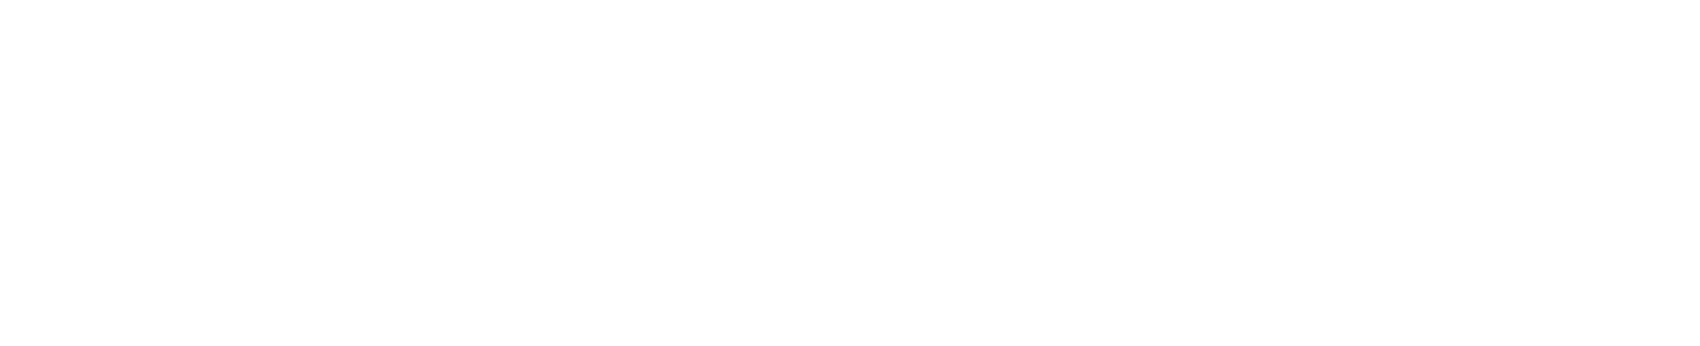 asistente digital